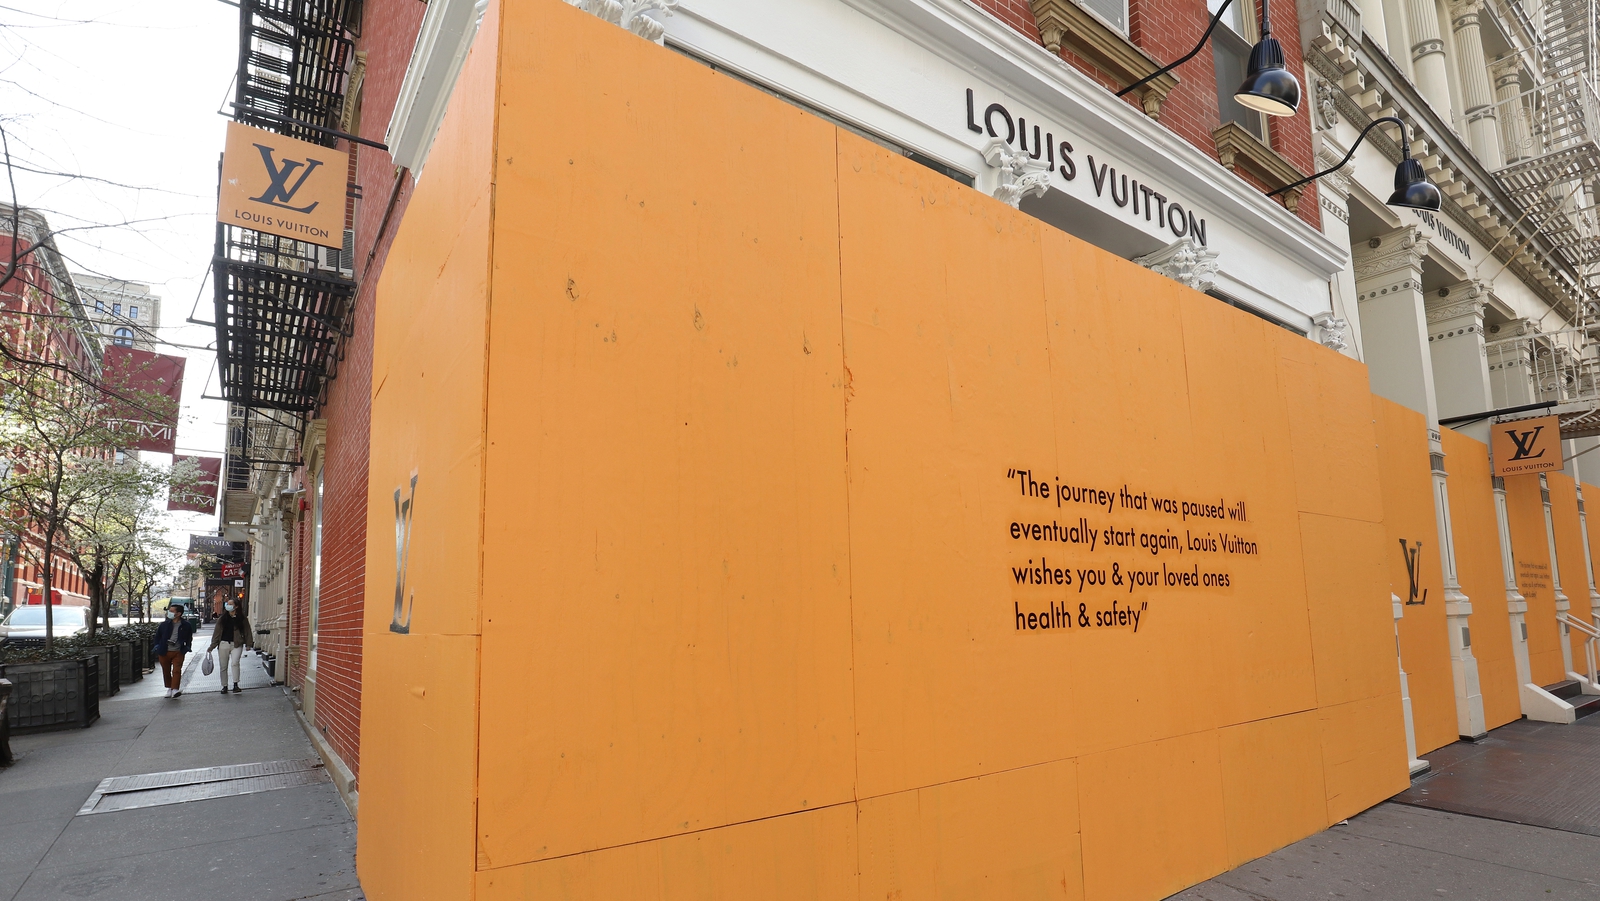 Louis Vuitton owner flags turnaround after sales slump